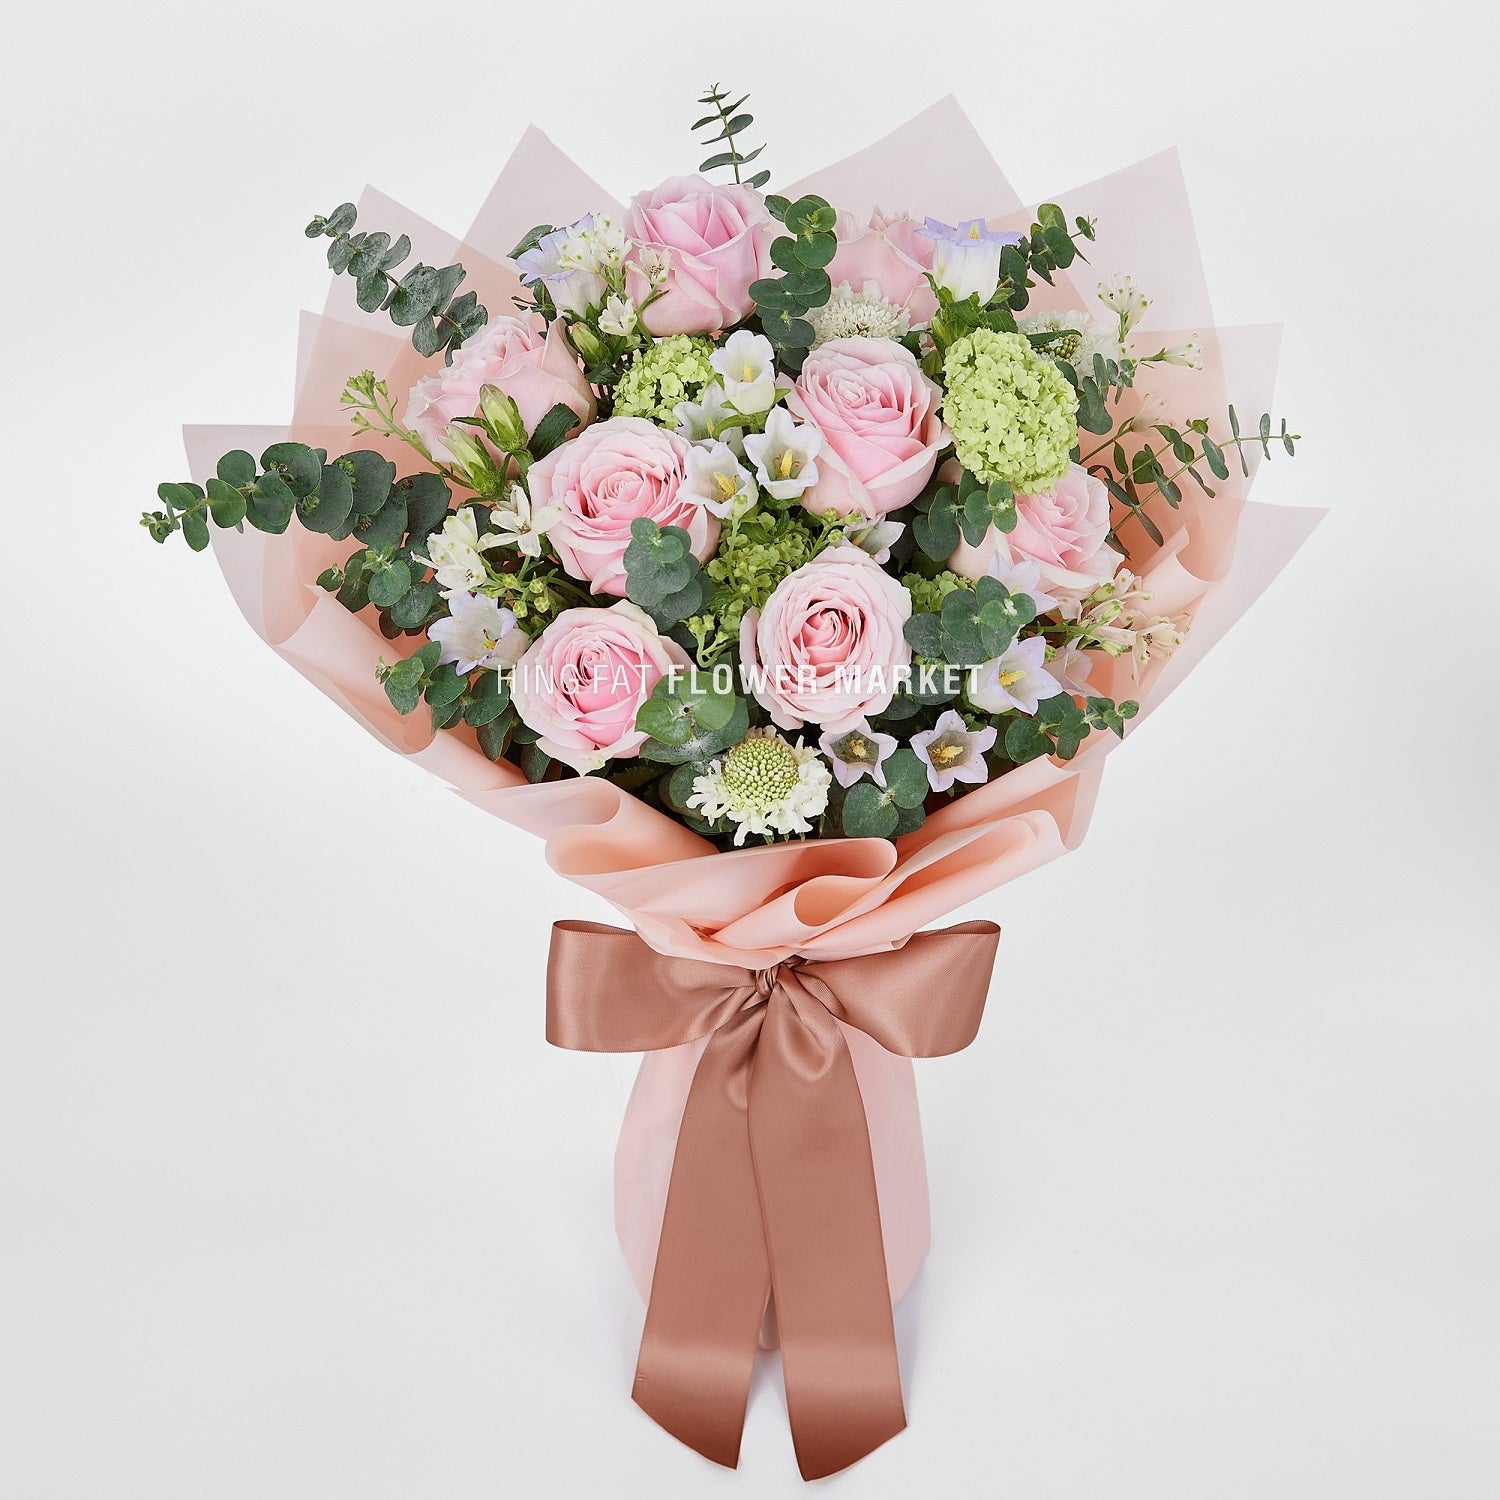 淺粉玫瑰風鈴花束 Pink rose and campanula bouquet